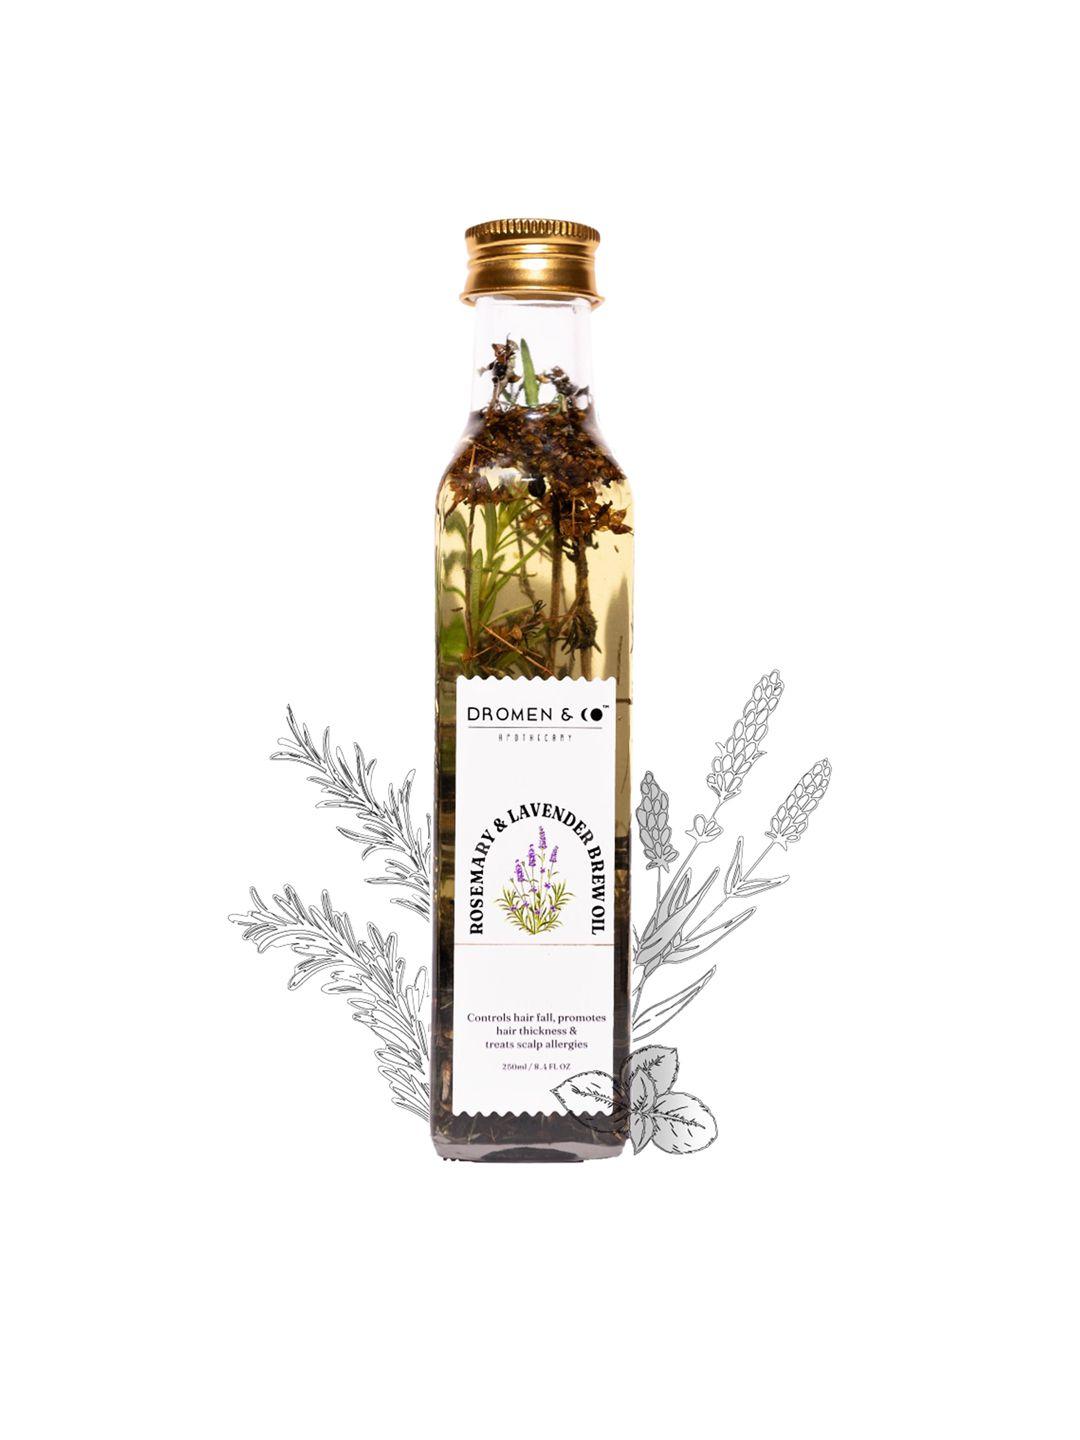 dromen & co rosemary & lavender brew oil for hair growth & hair fall control - 250ml